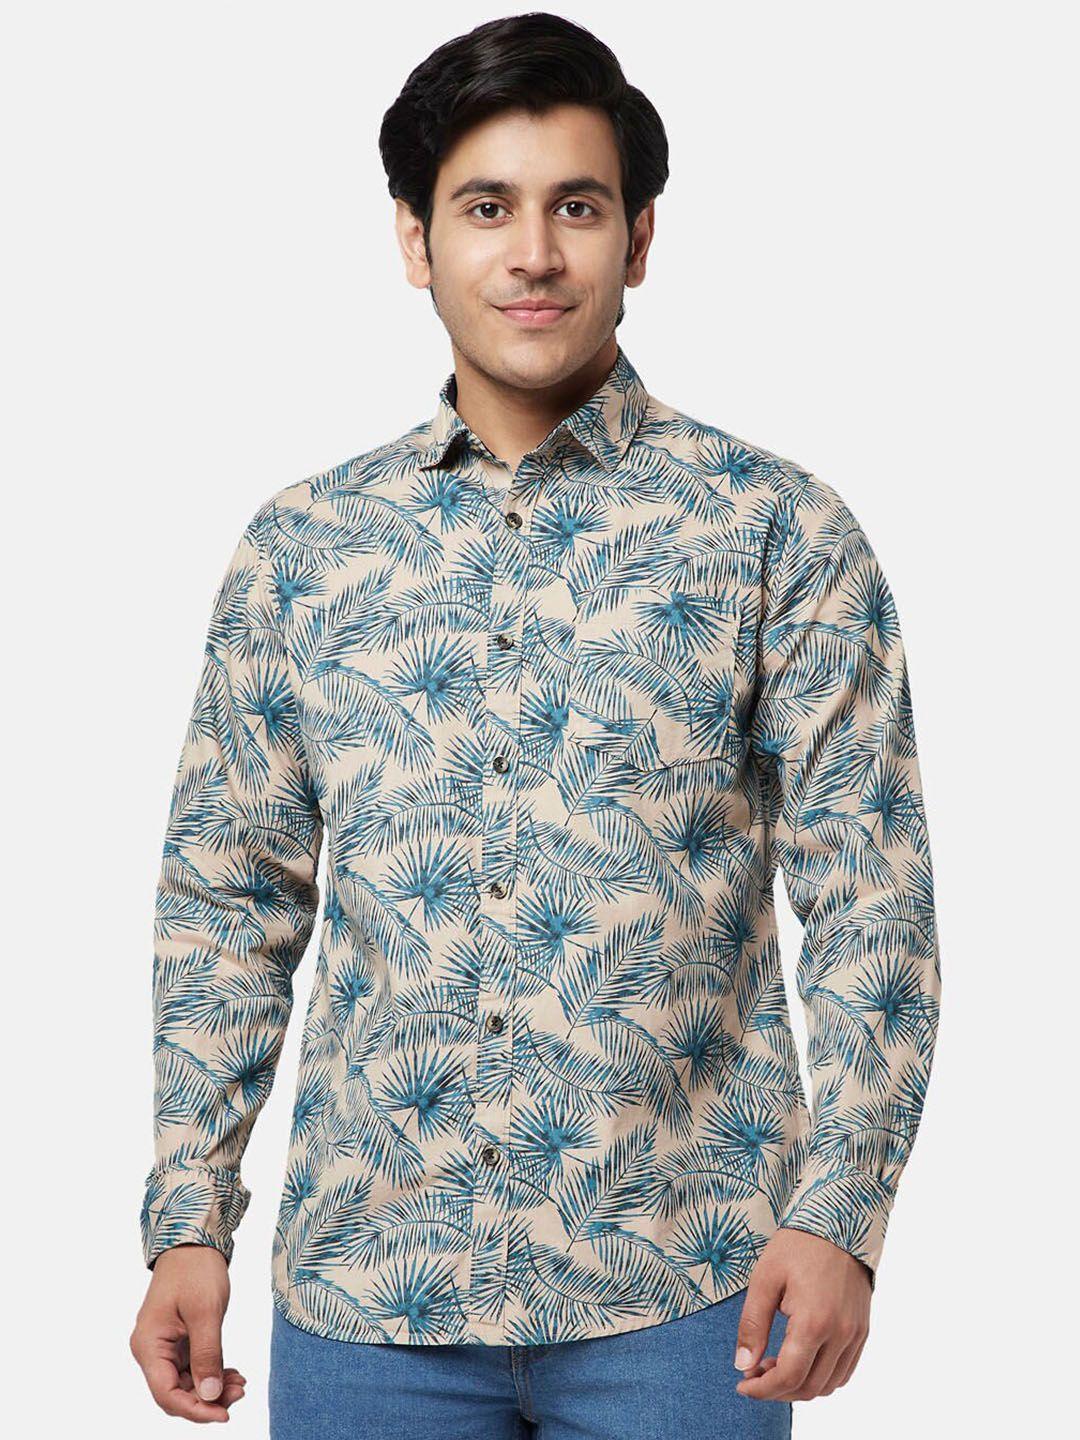 yu by pantaloons men slim fit floral printed cotton casual shirt